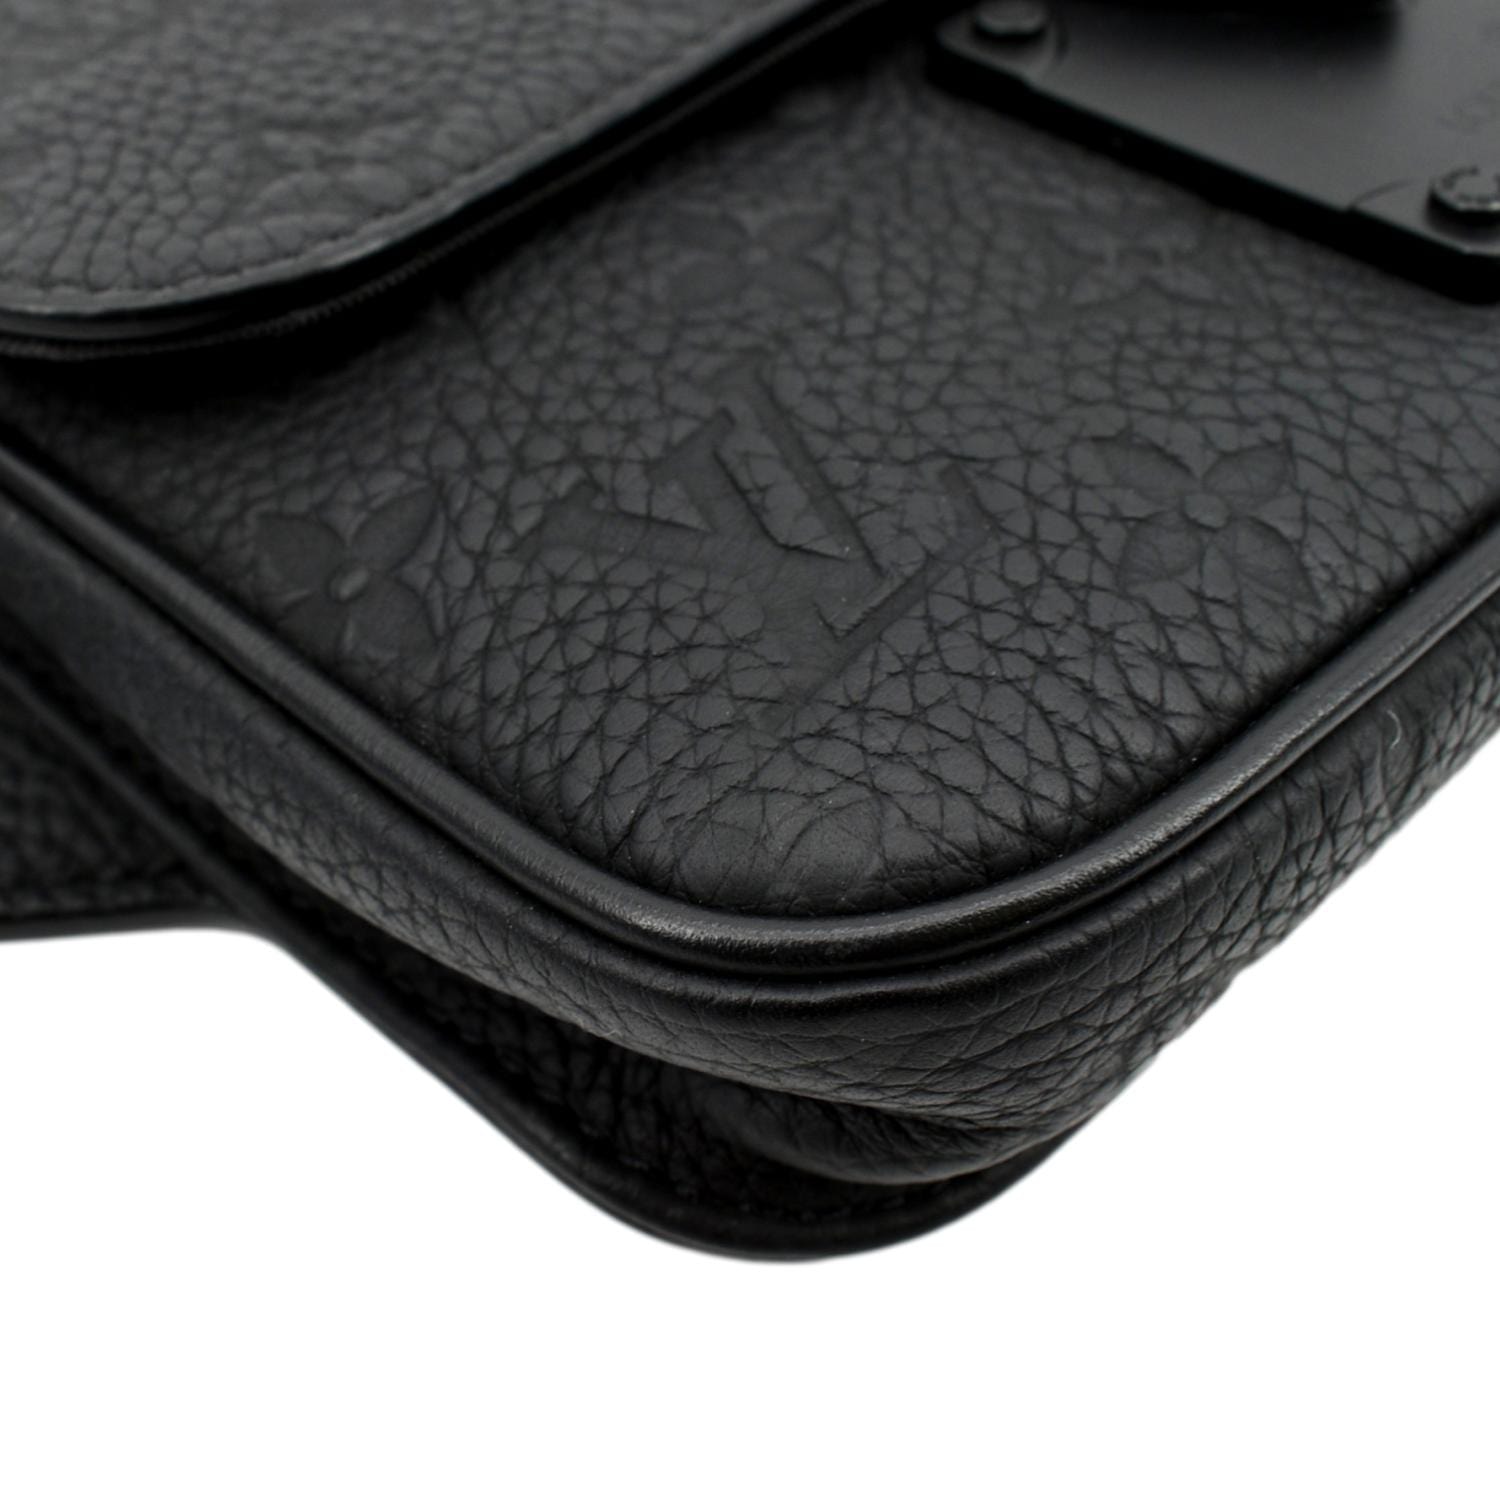 Louis Vuitton Monogram Exclusive Online Prelaunch - S Lock Sling Bag, Black